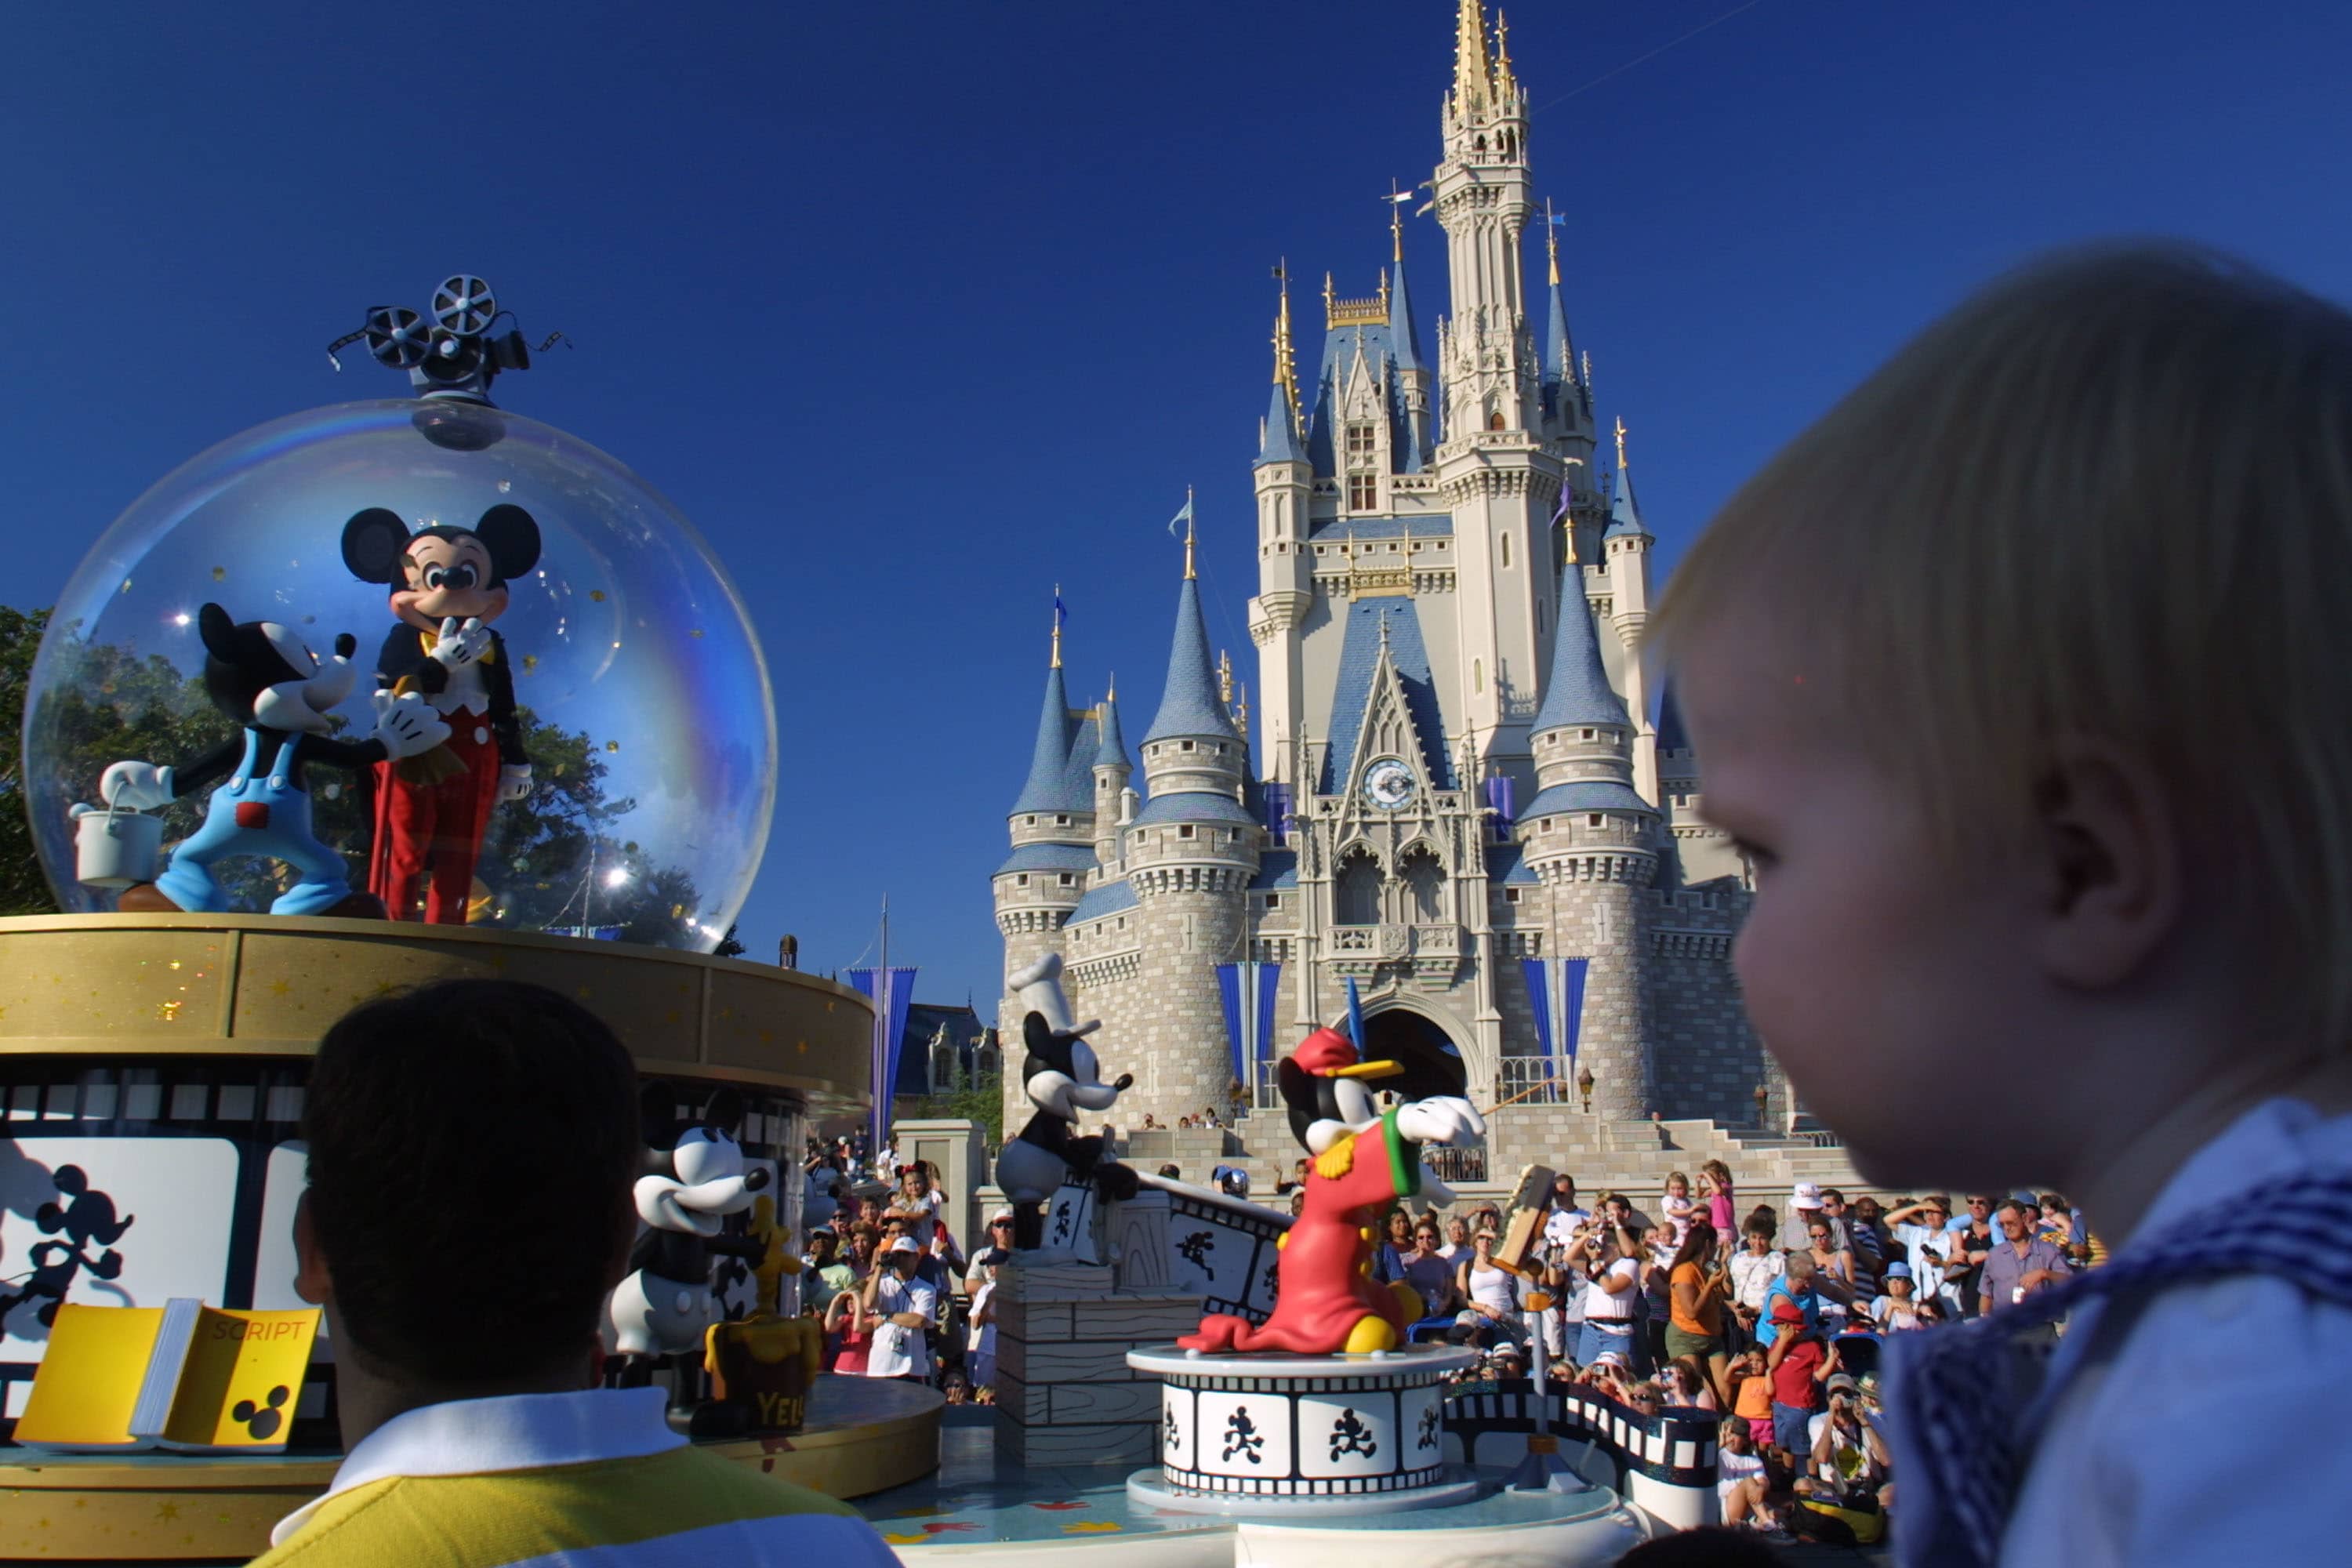 The return of Bob Iger: Disney CEO makes moves that should please investors